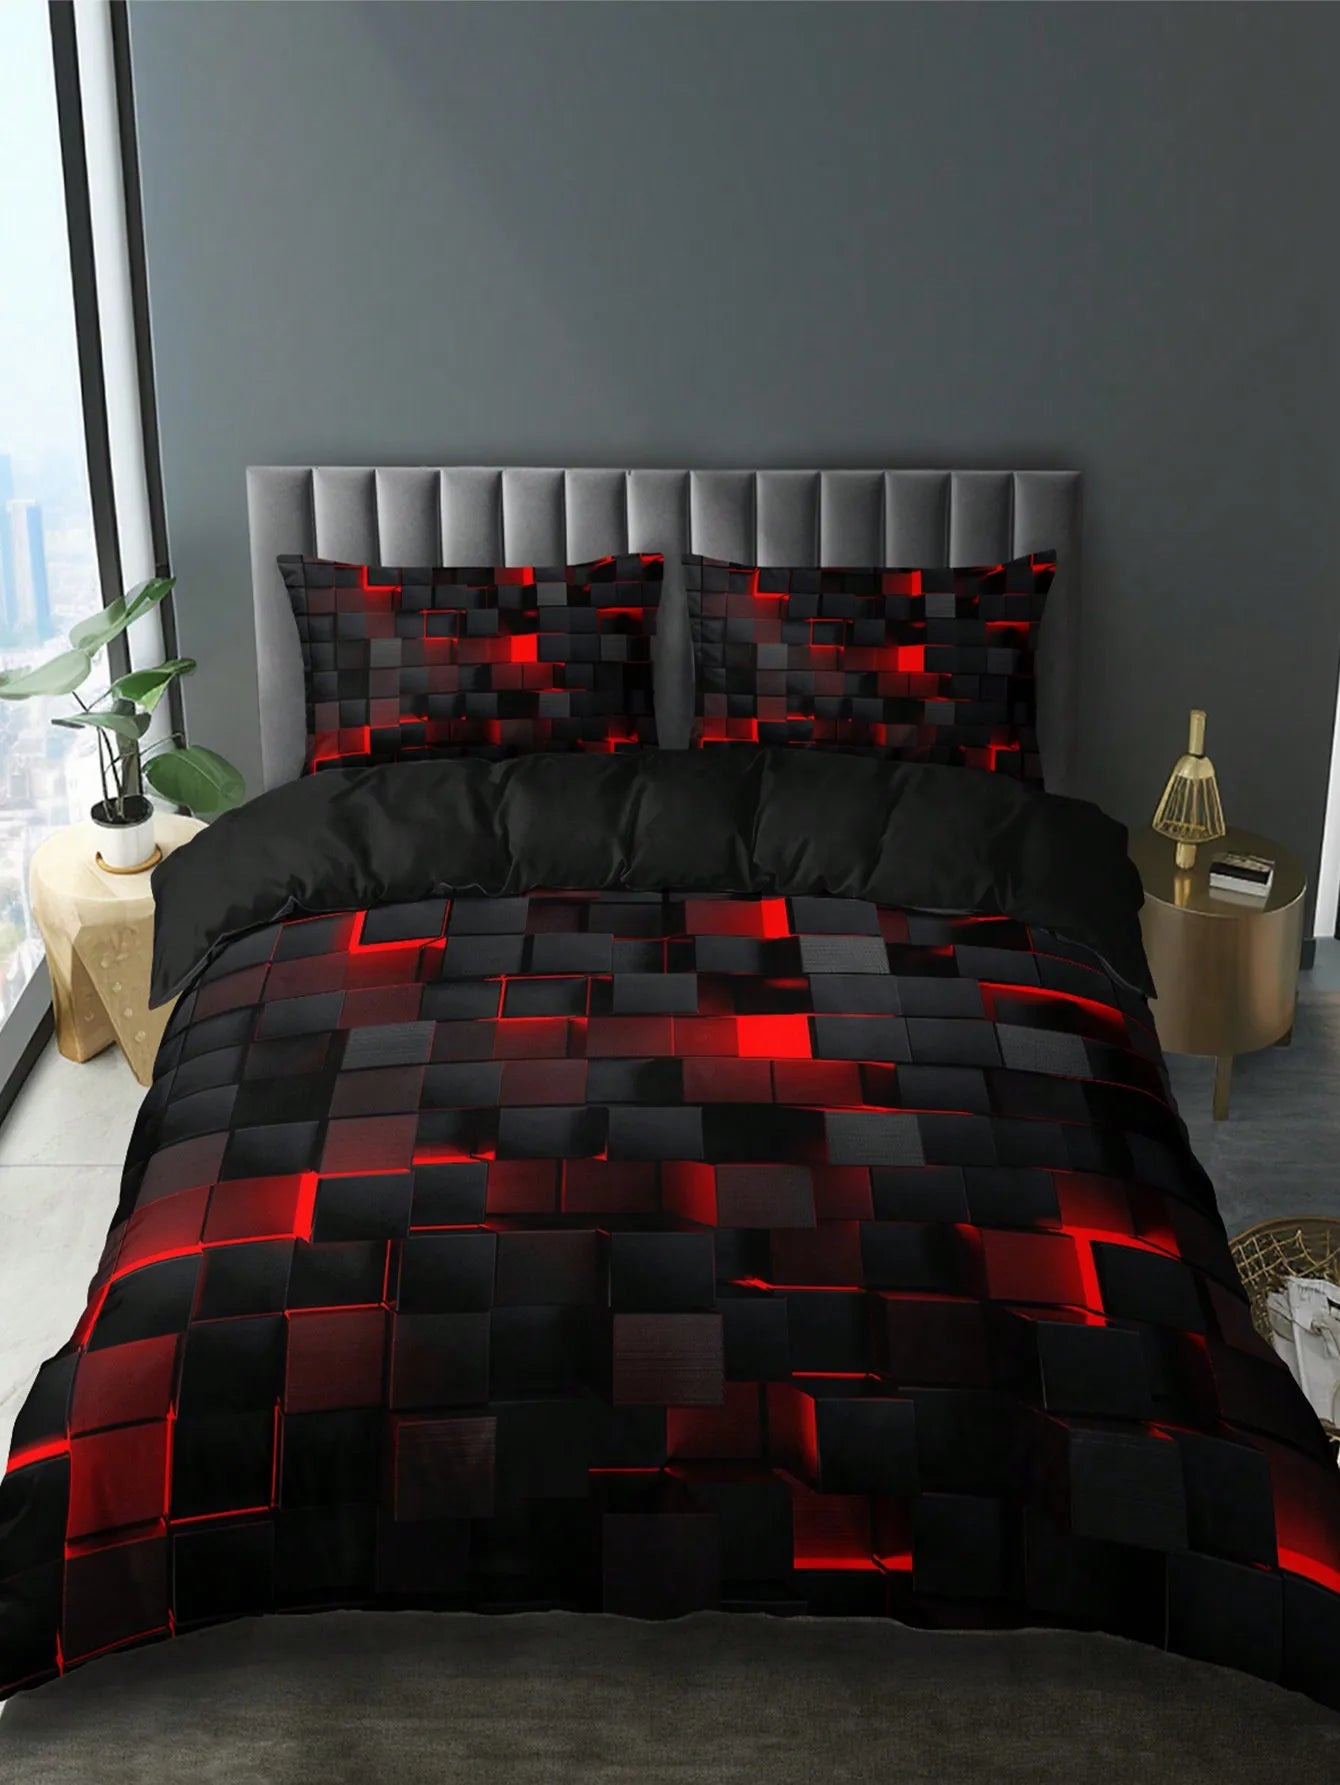 Teknologi stil rød gitter dyne cover sæt inklusive 1 dyne cover og 2 pillowcases egnede til hjemmet og sovesal brug